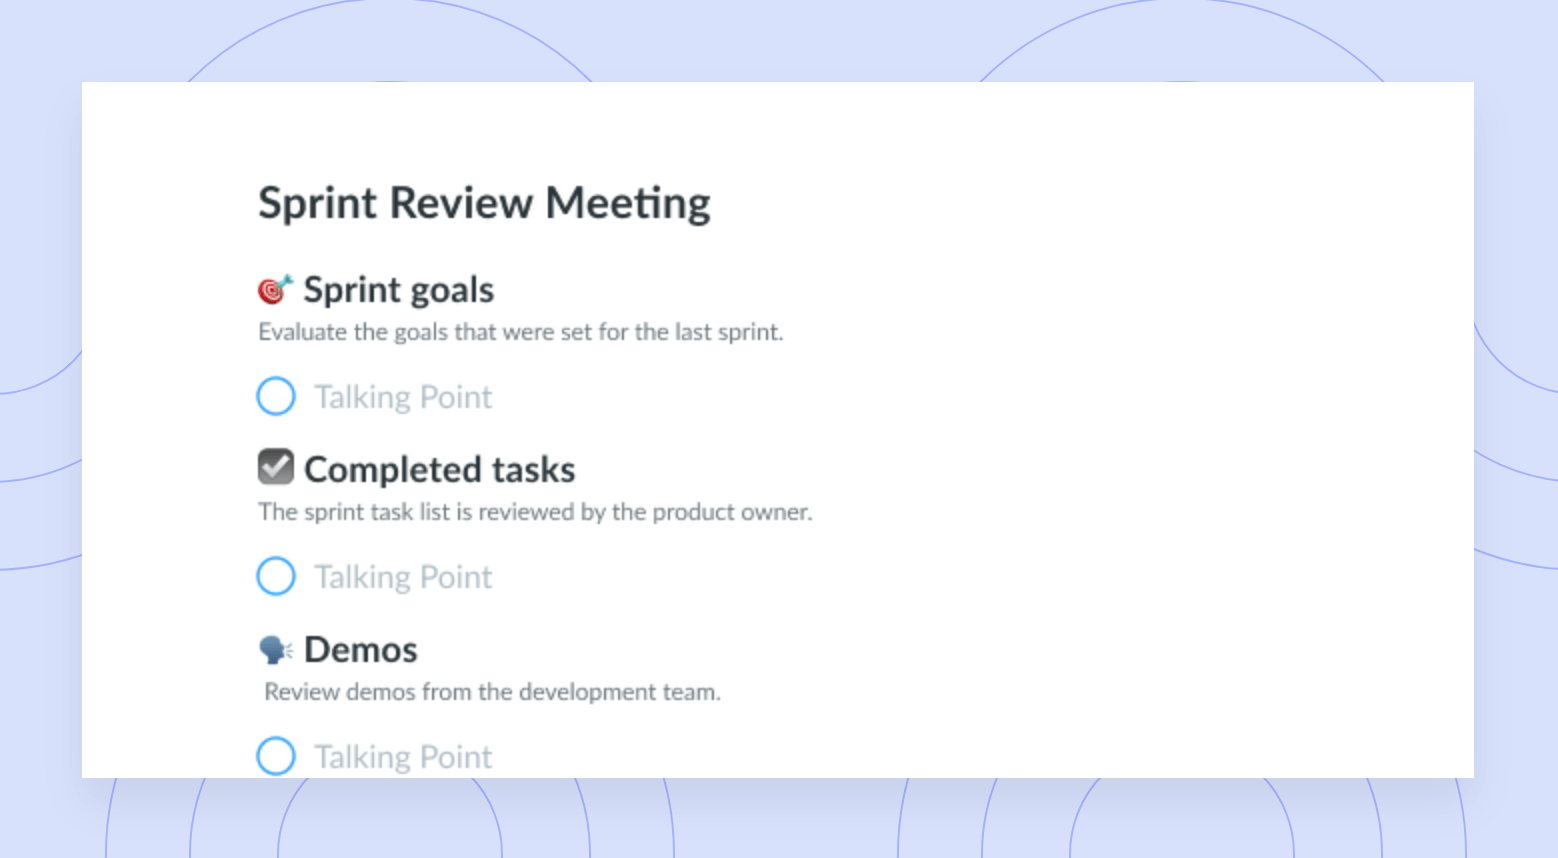 Sprint Review Meeting Agenda Template